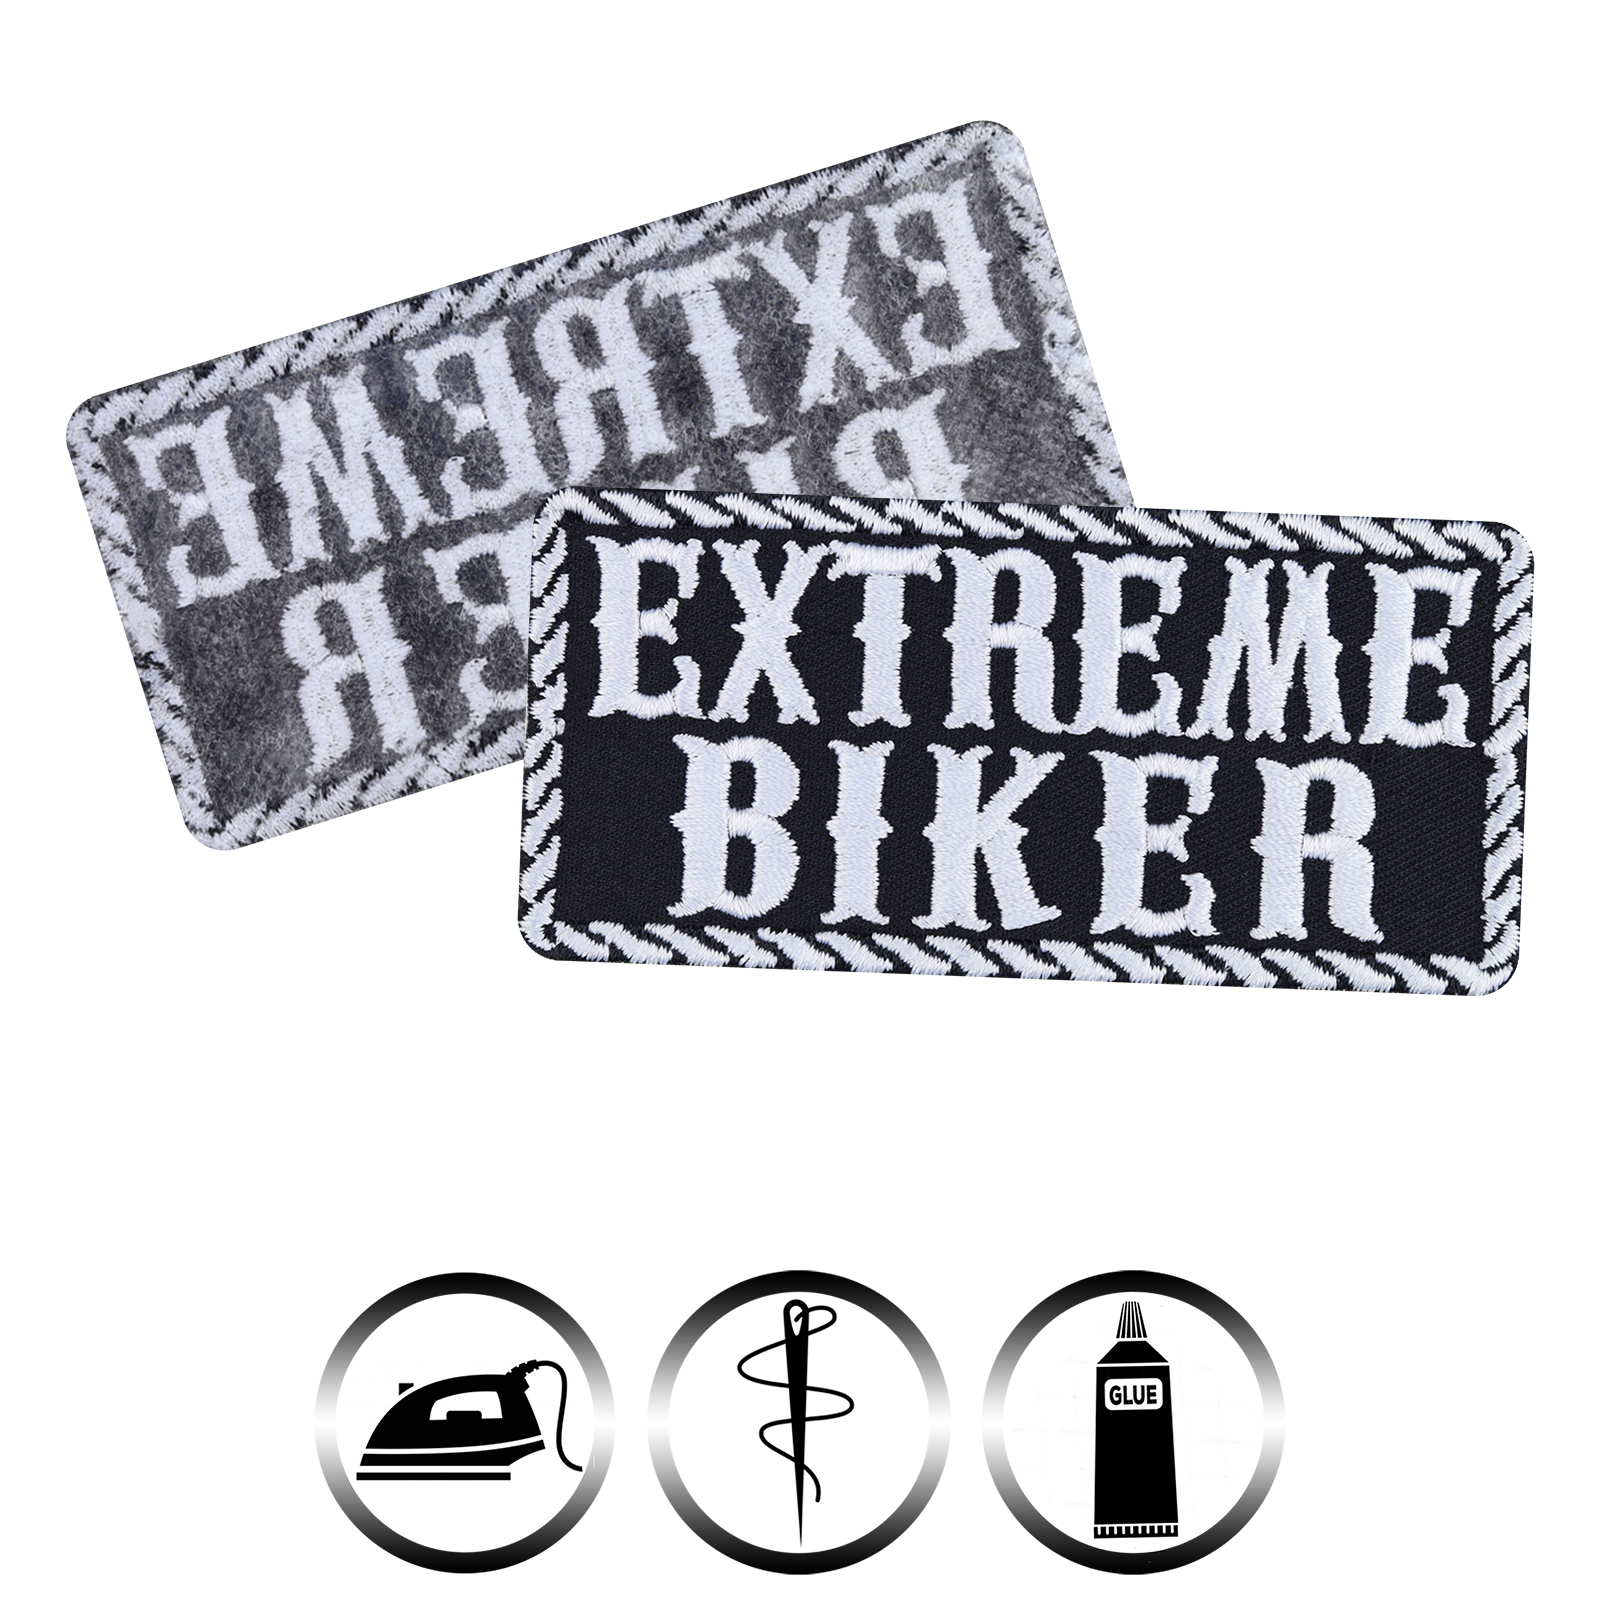 Extreme biker - Patch